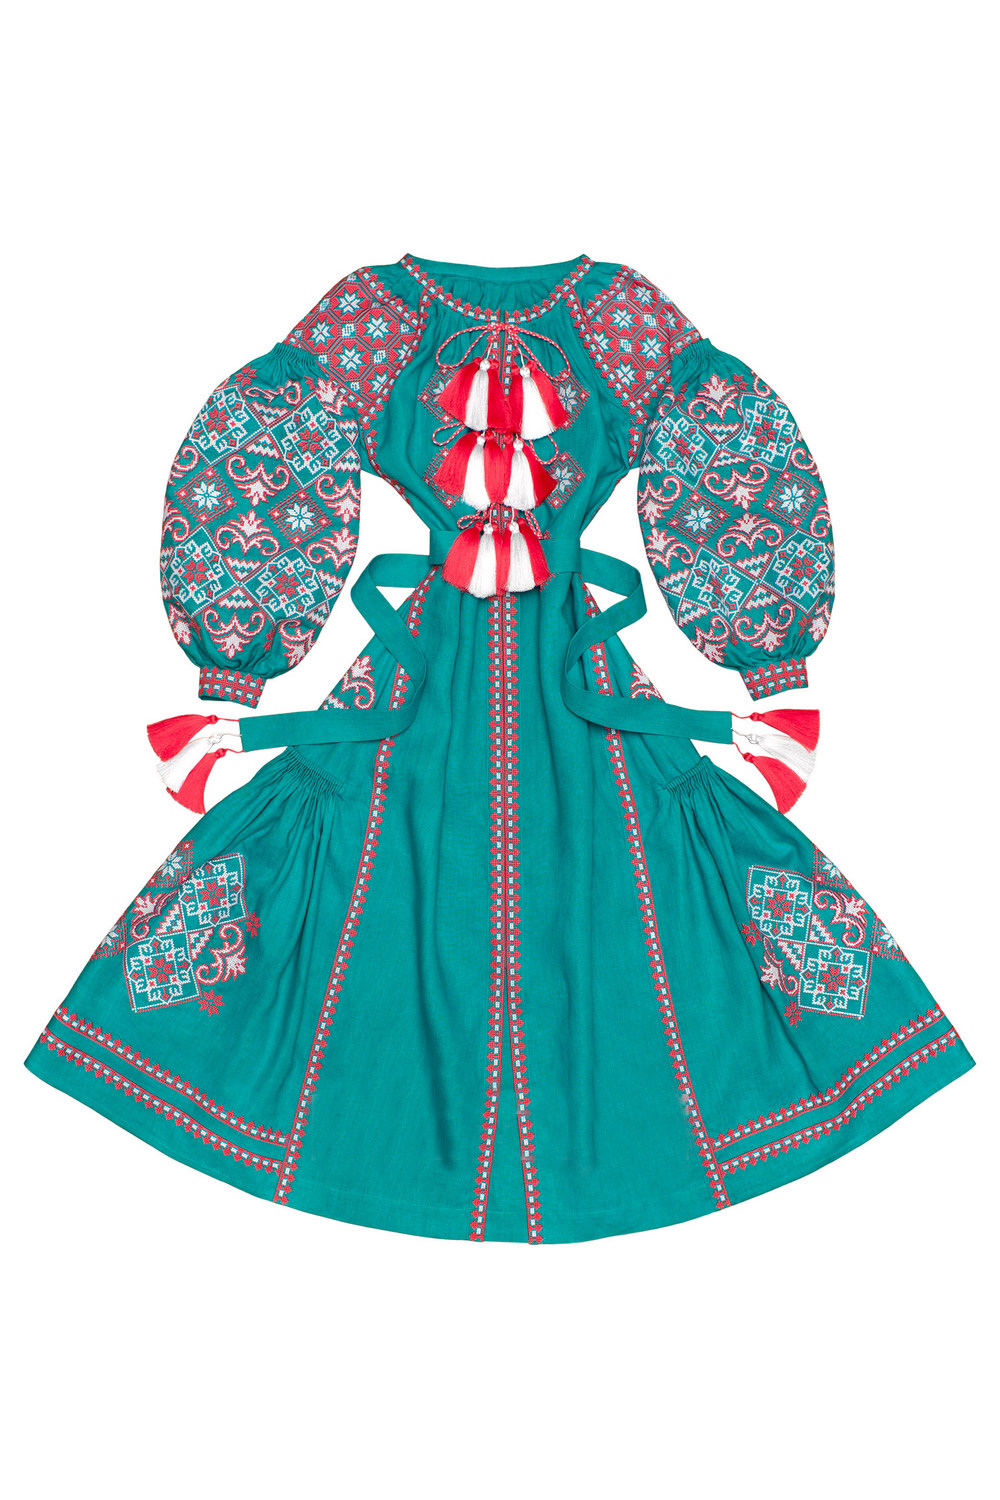 Buy Folk ethnic Festival Linen long Blue Ukrainian Vyshyvanka dress, Boho Hippie Comfortable embroidered dress